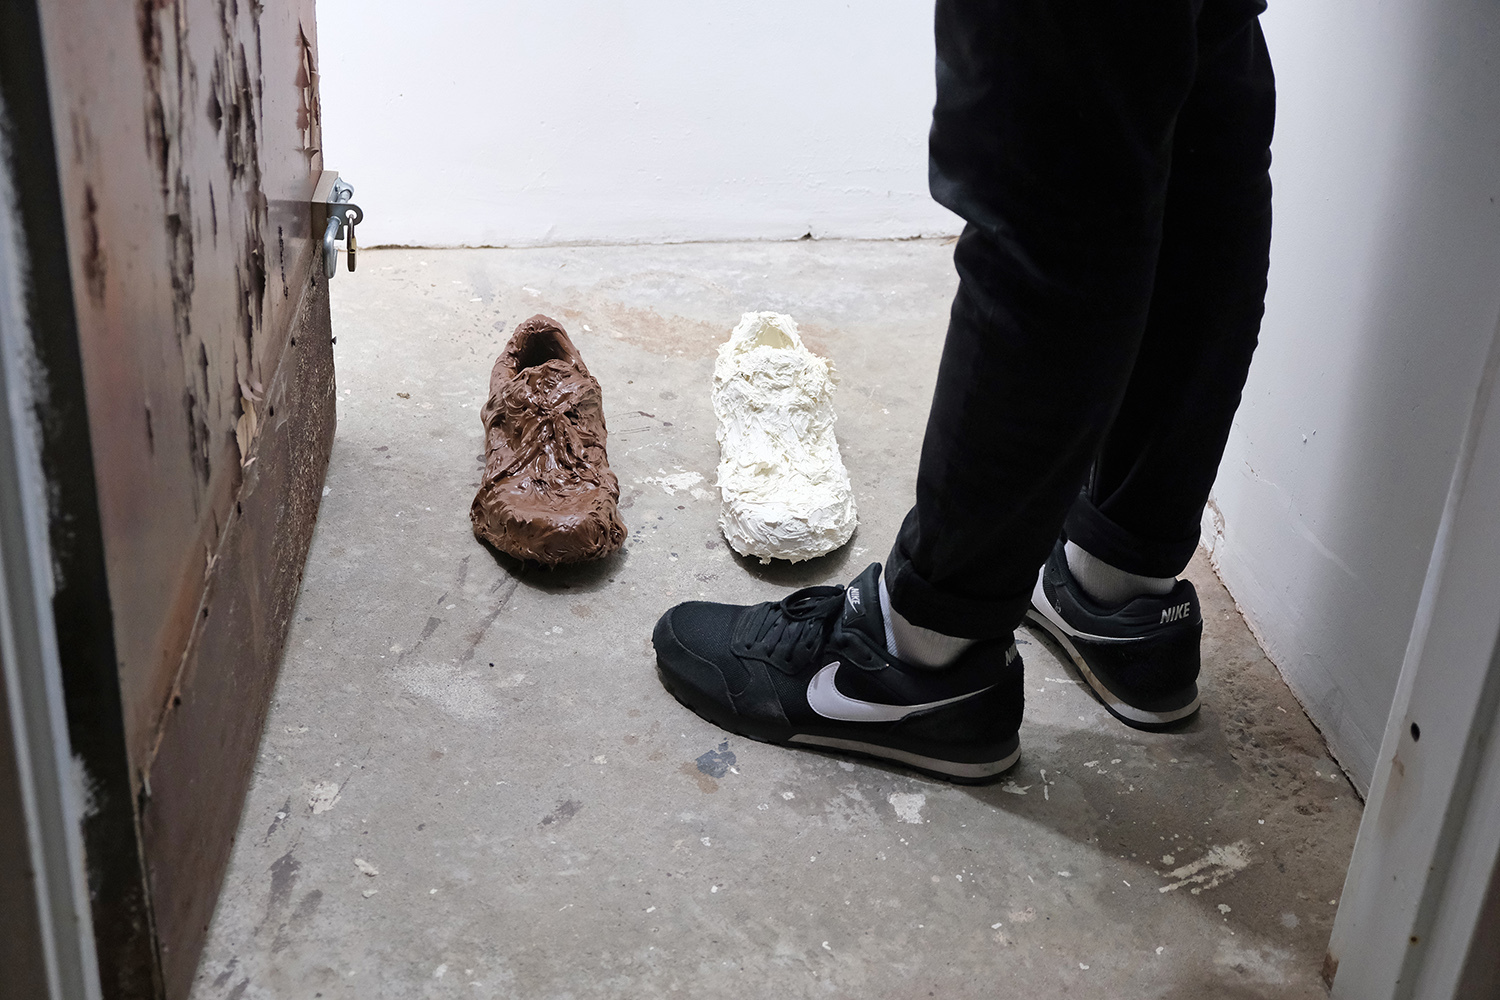 Thomas Rentmeister, 2021, Saucony Kivara, Shoes, Nutella, Penaten Cream, 33 x 34 x 14 cm, 5